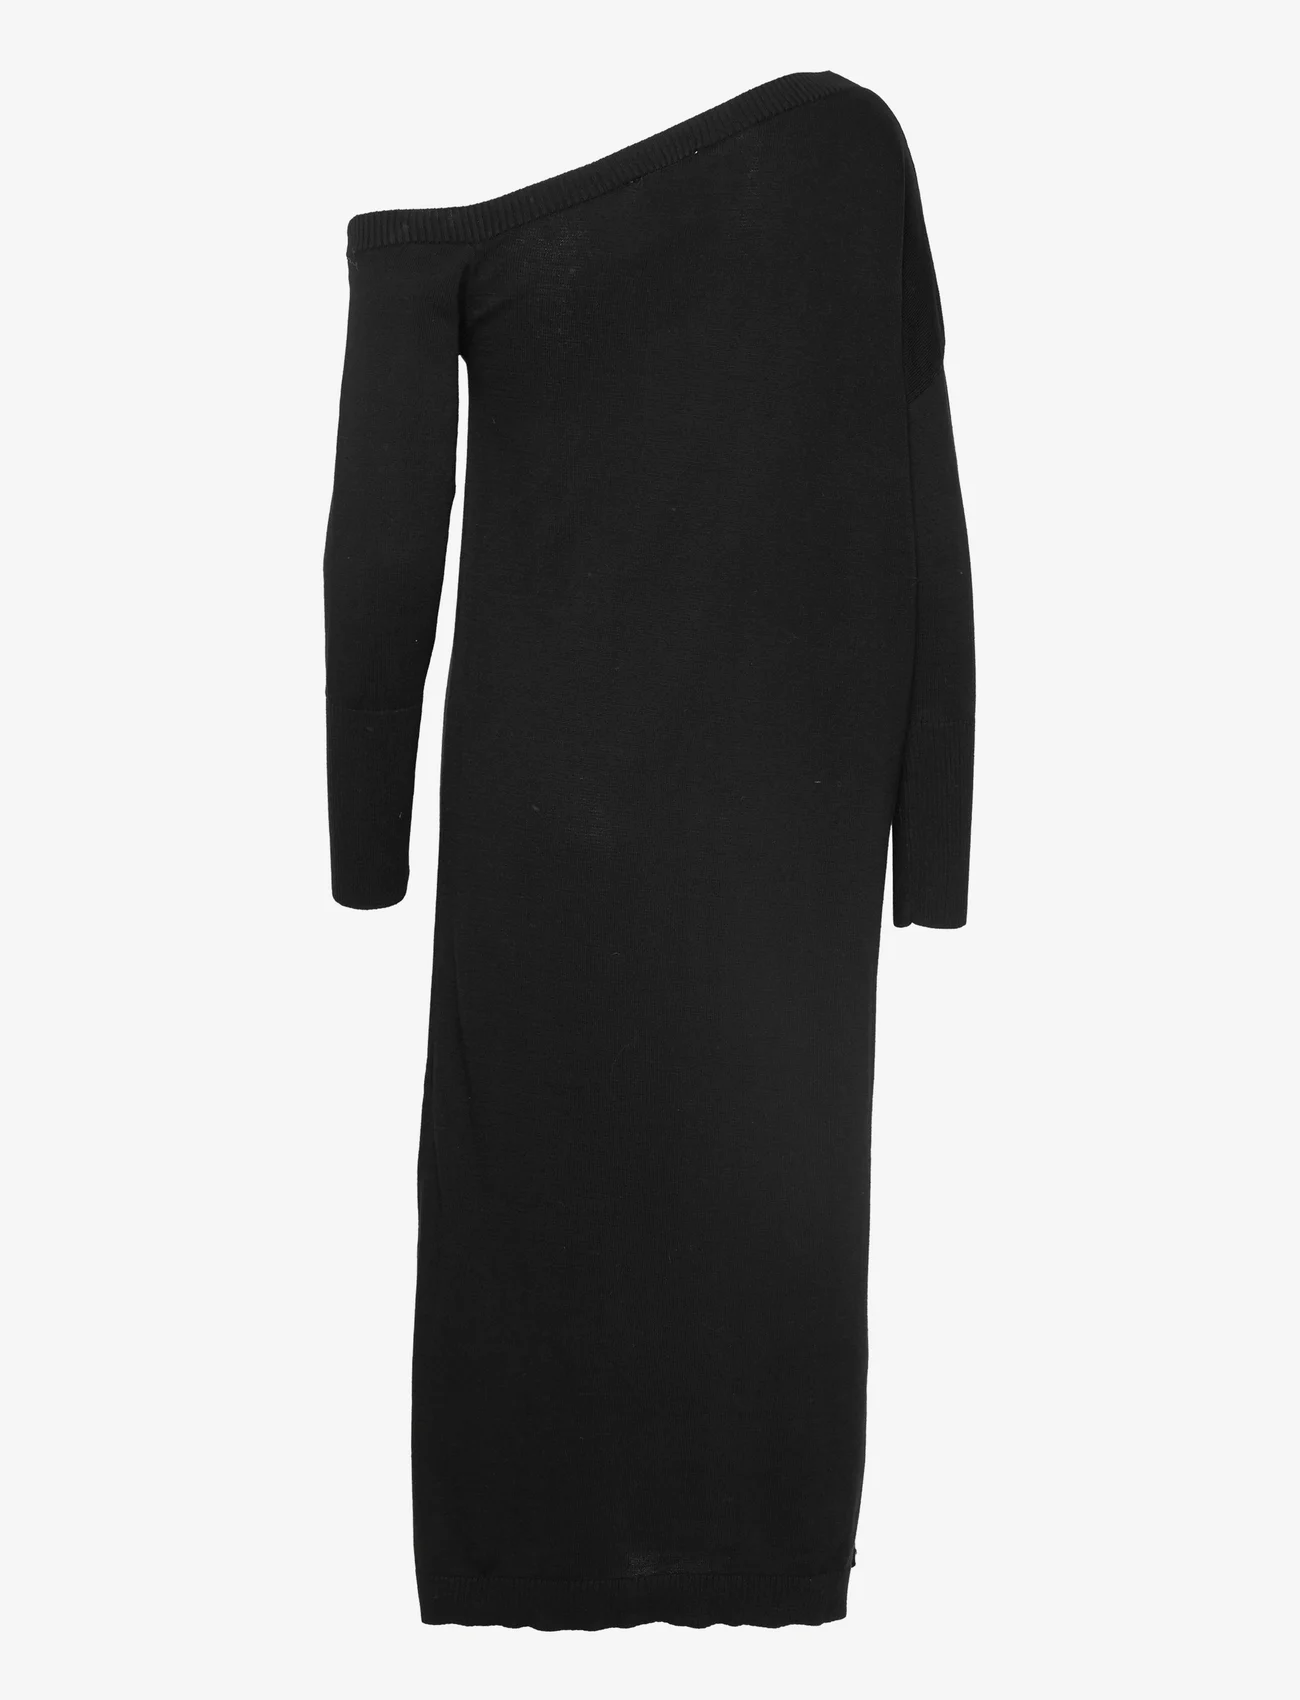 My Essential Wardrobe - LolaMW Cut Out Knit Dress - strikkjoler - black - 1